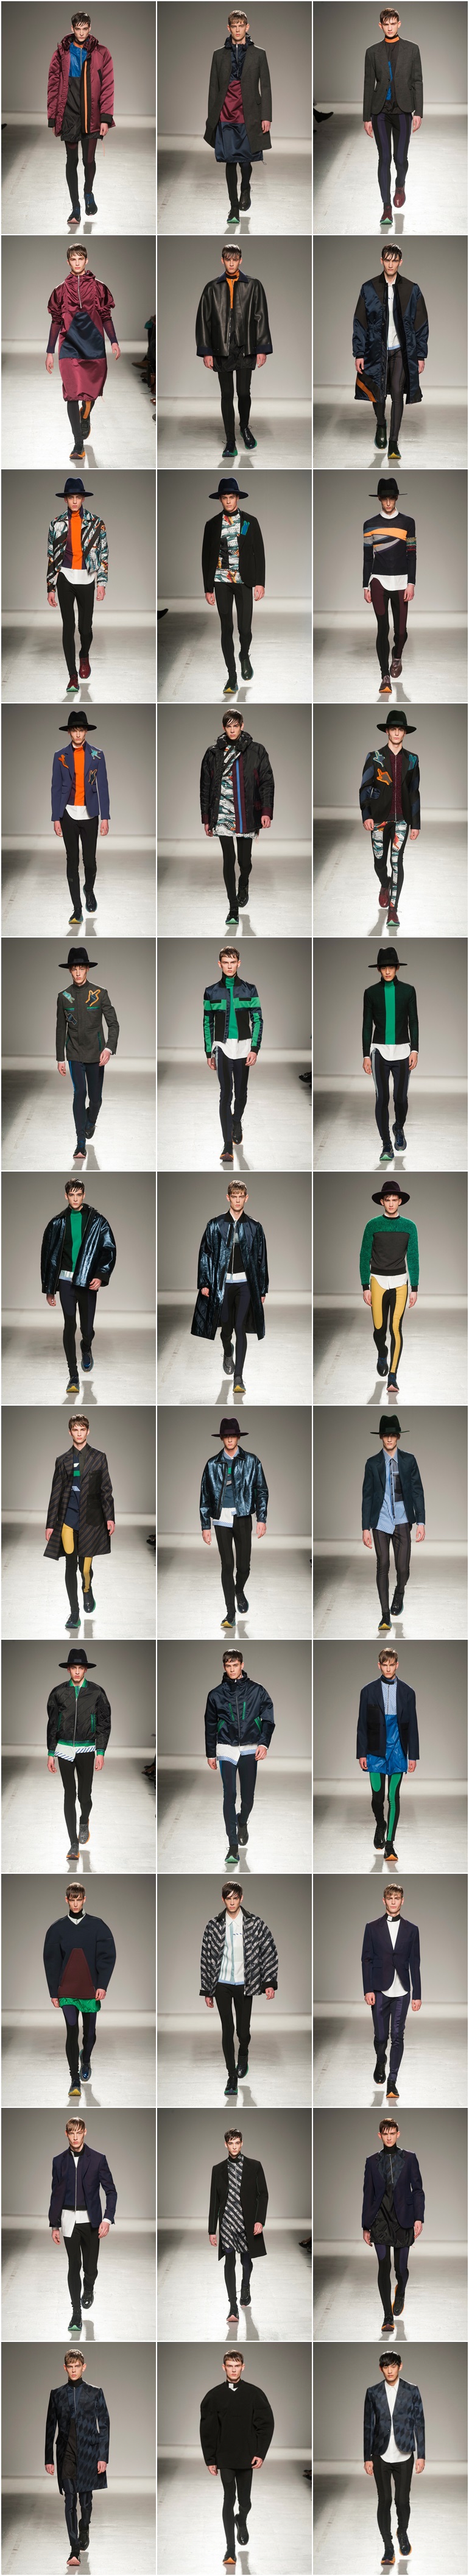 john-galliano-fall-winter-2014-fashion4addicts.com